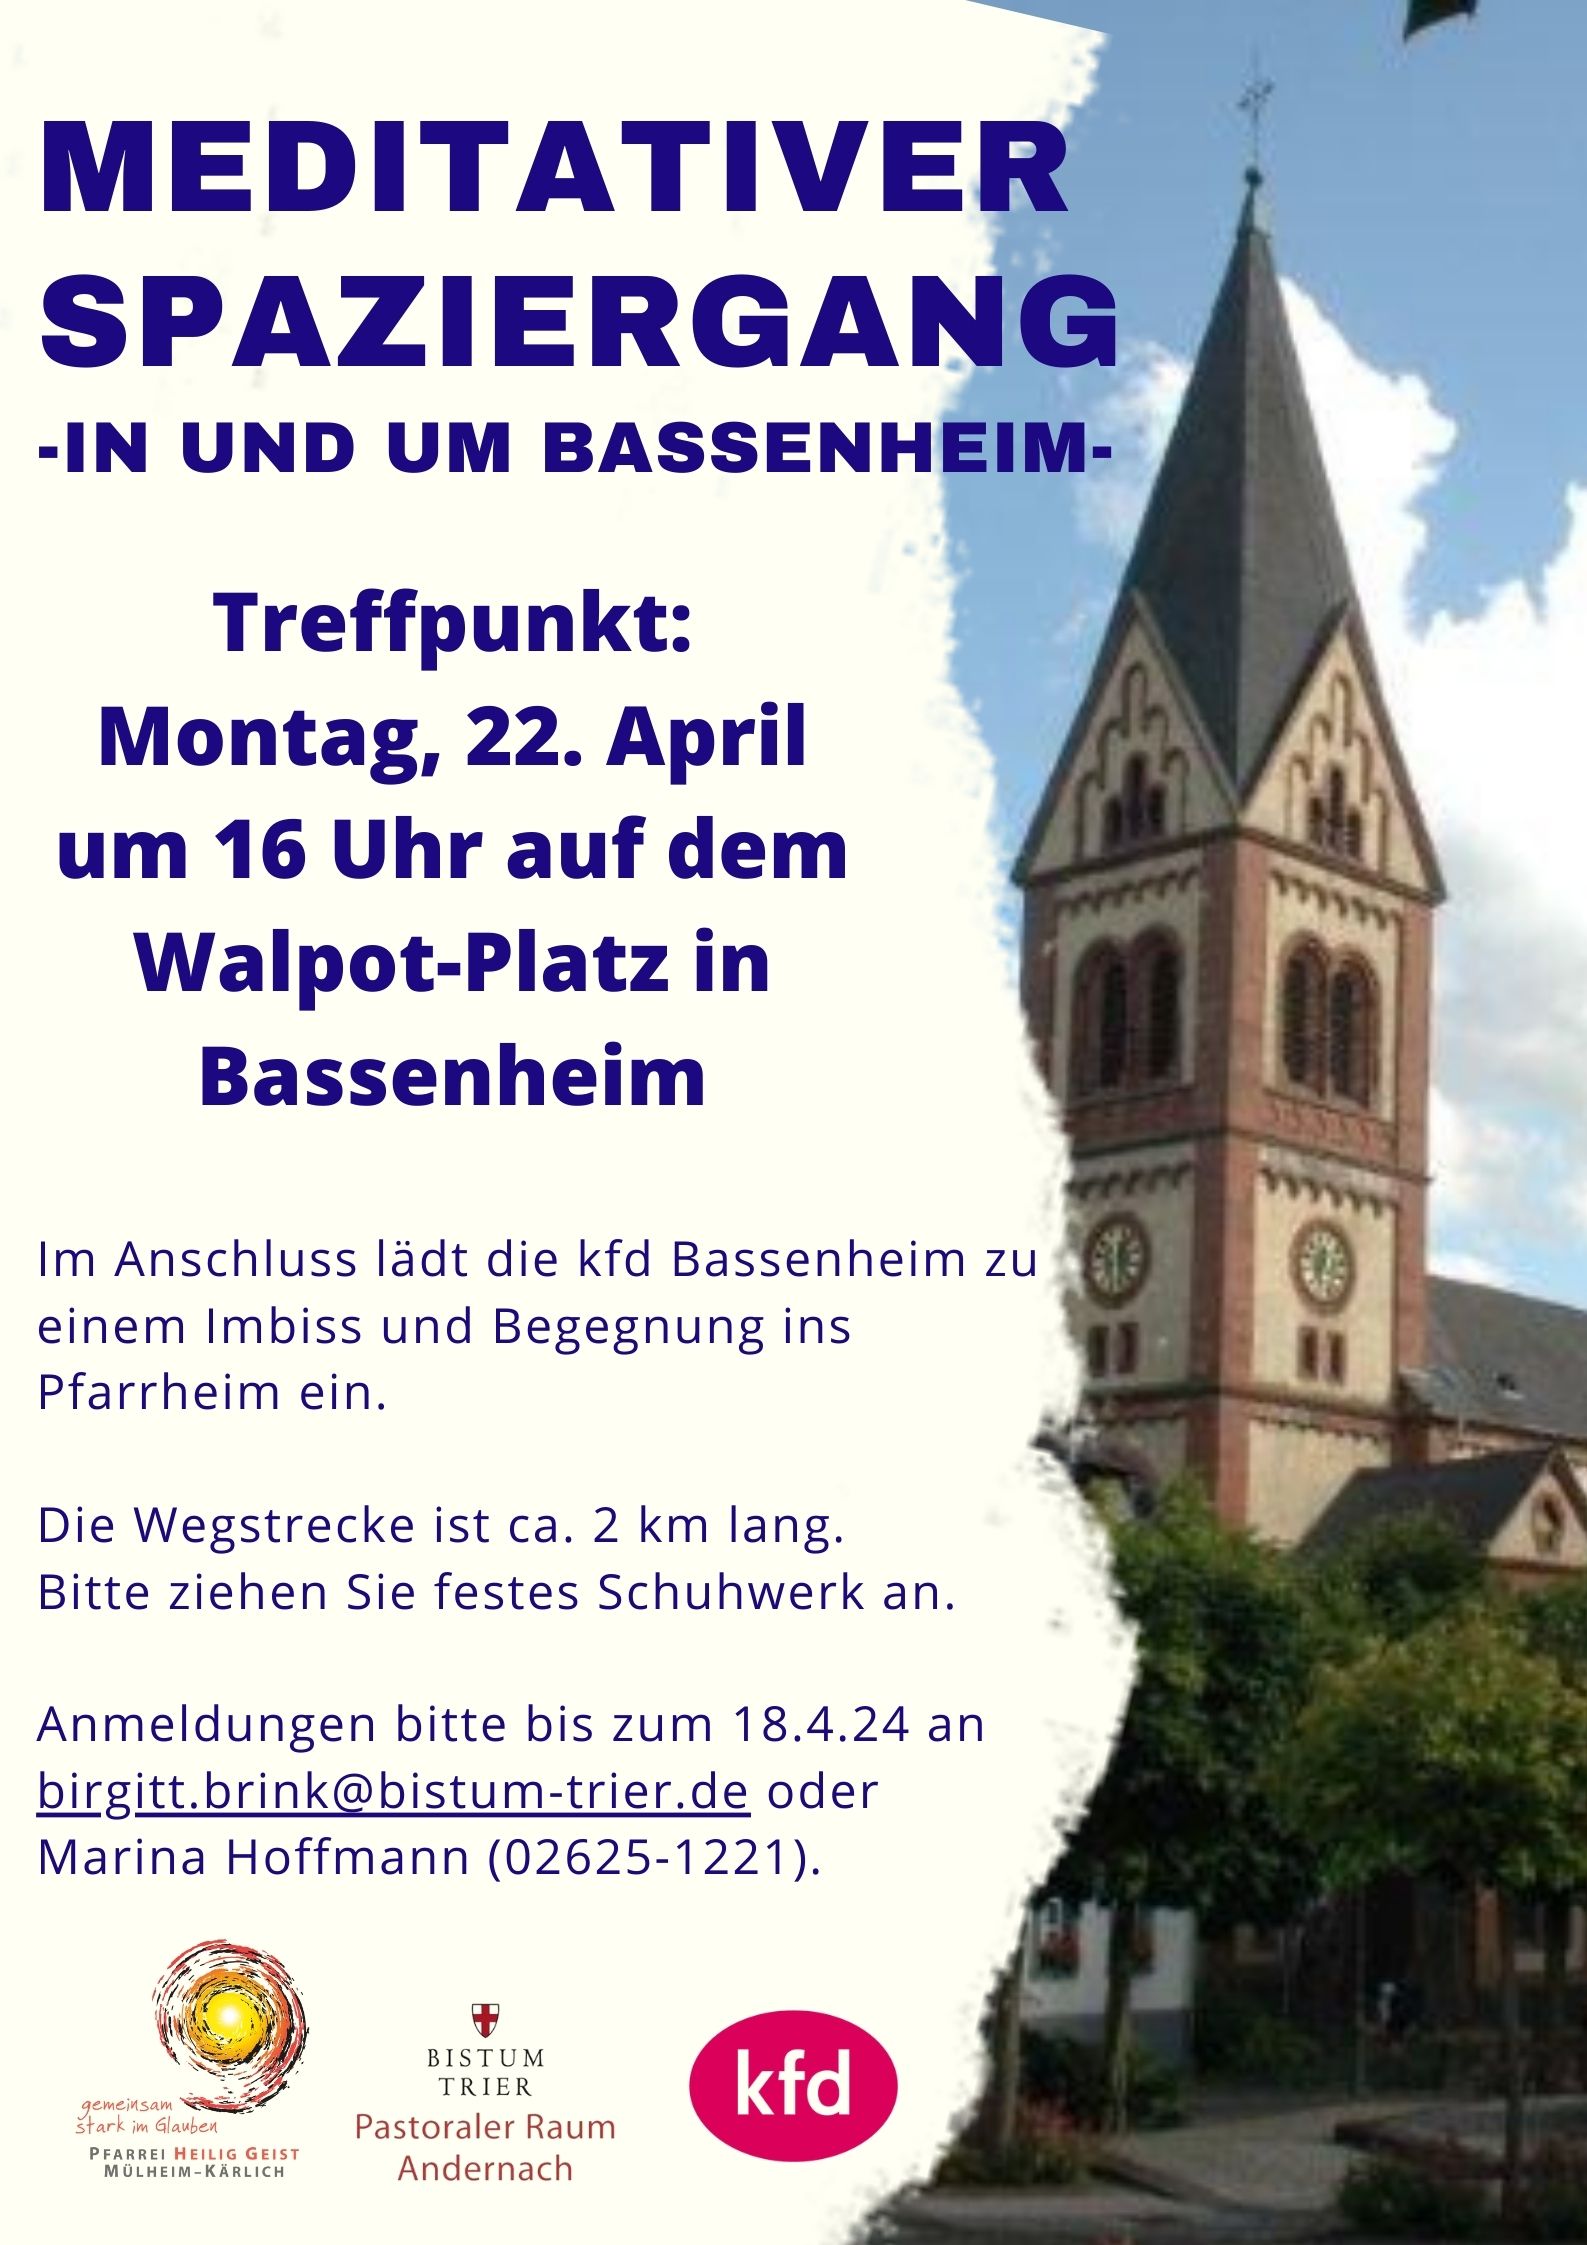 Plakat zum Spaziergang in Bassenheim